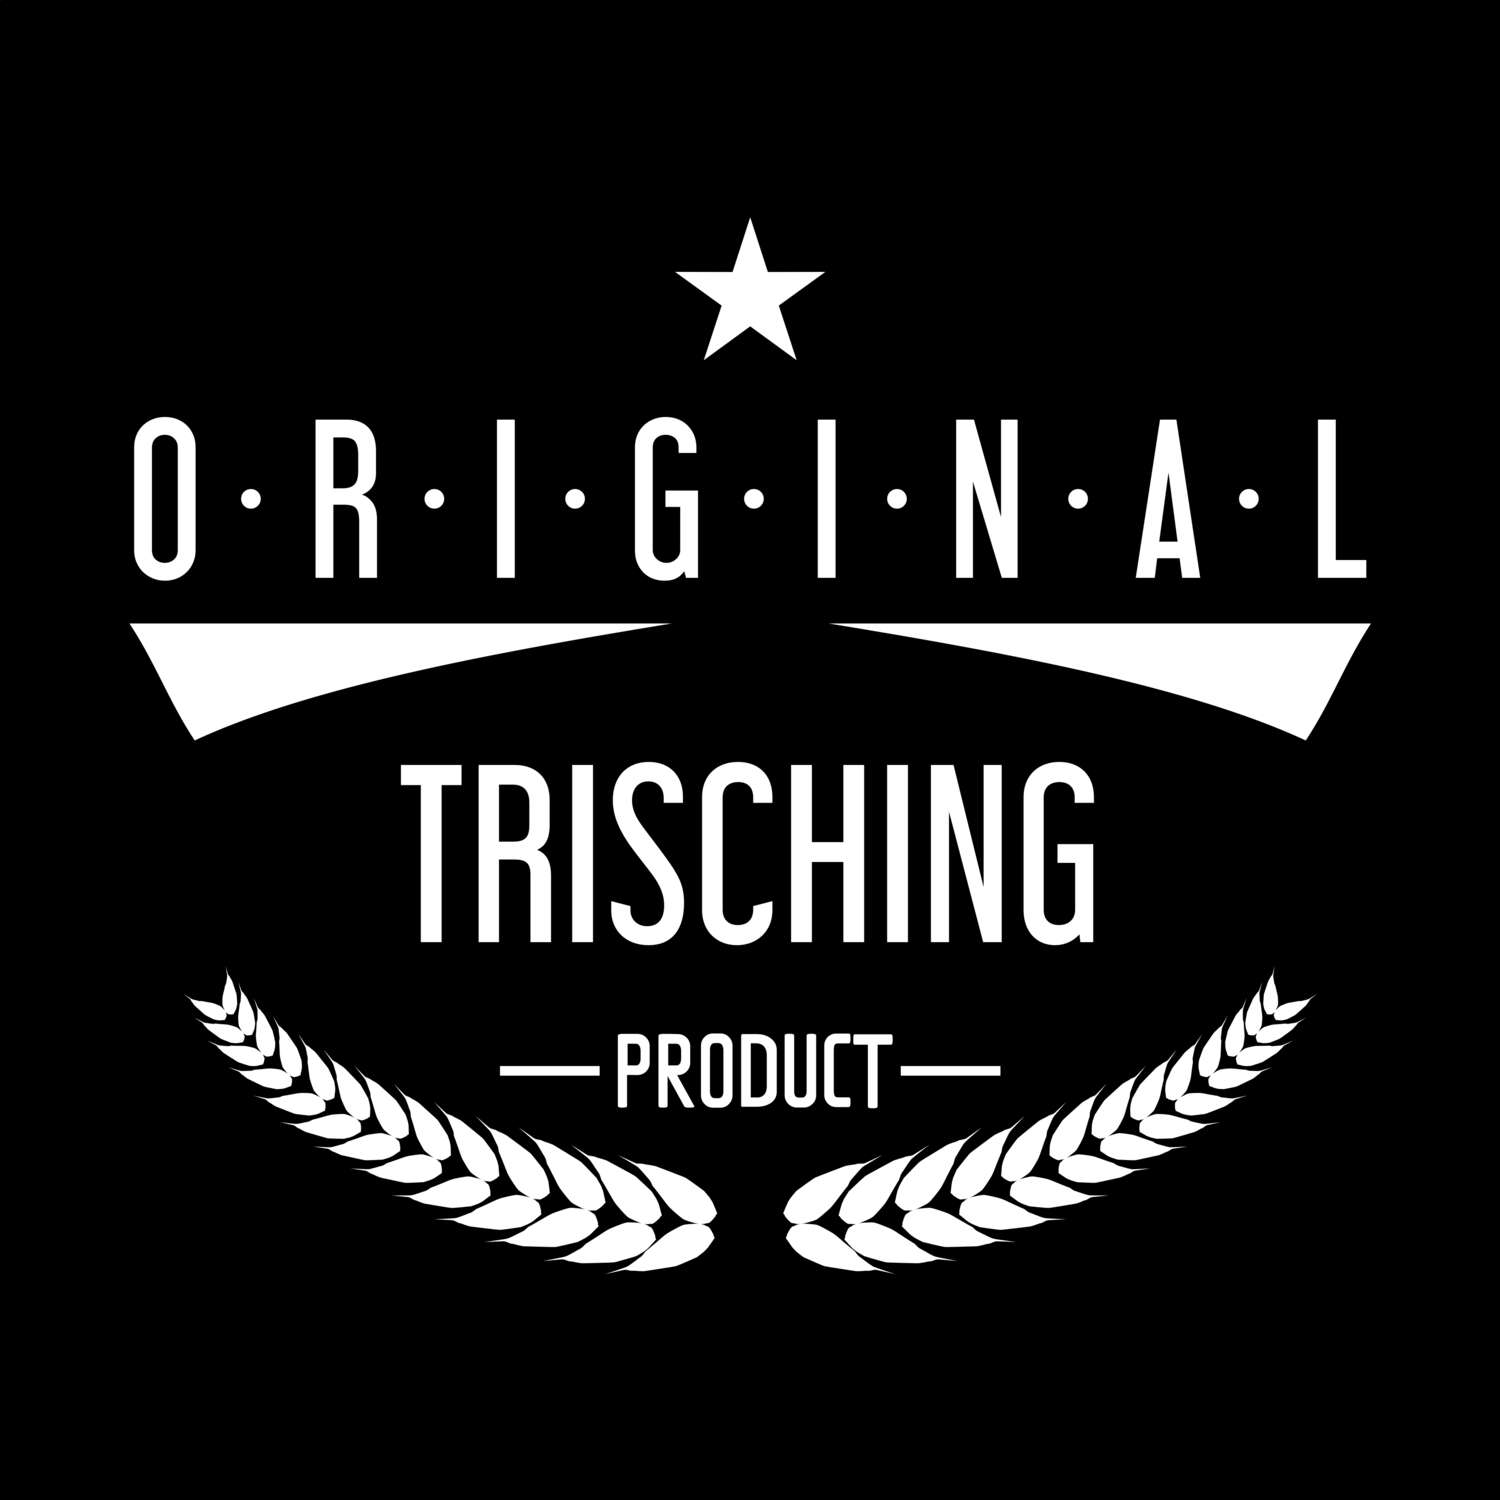 Trisching T-Shirt »Original Product«